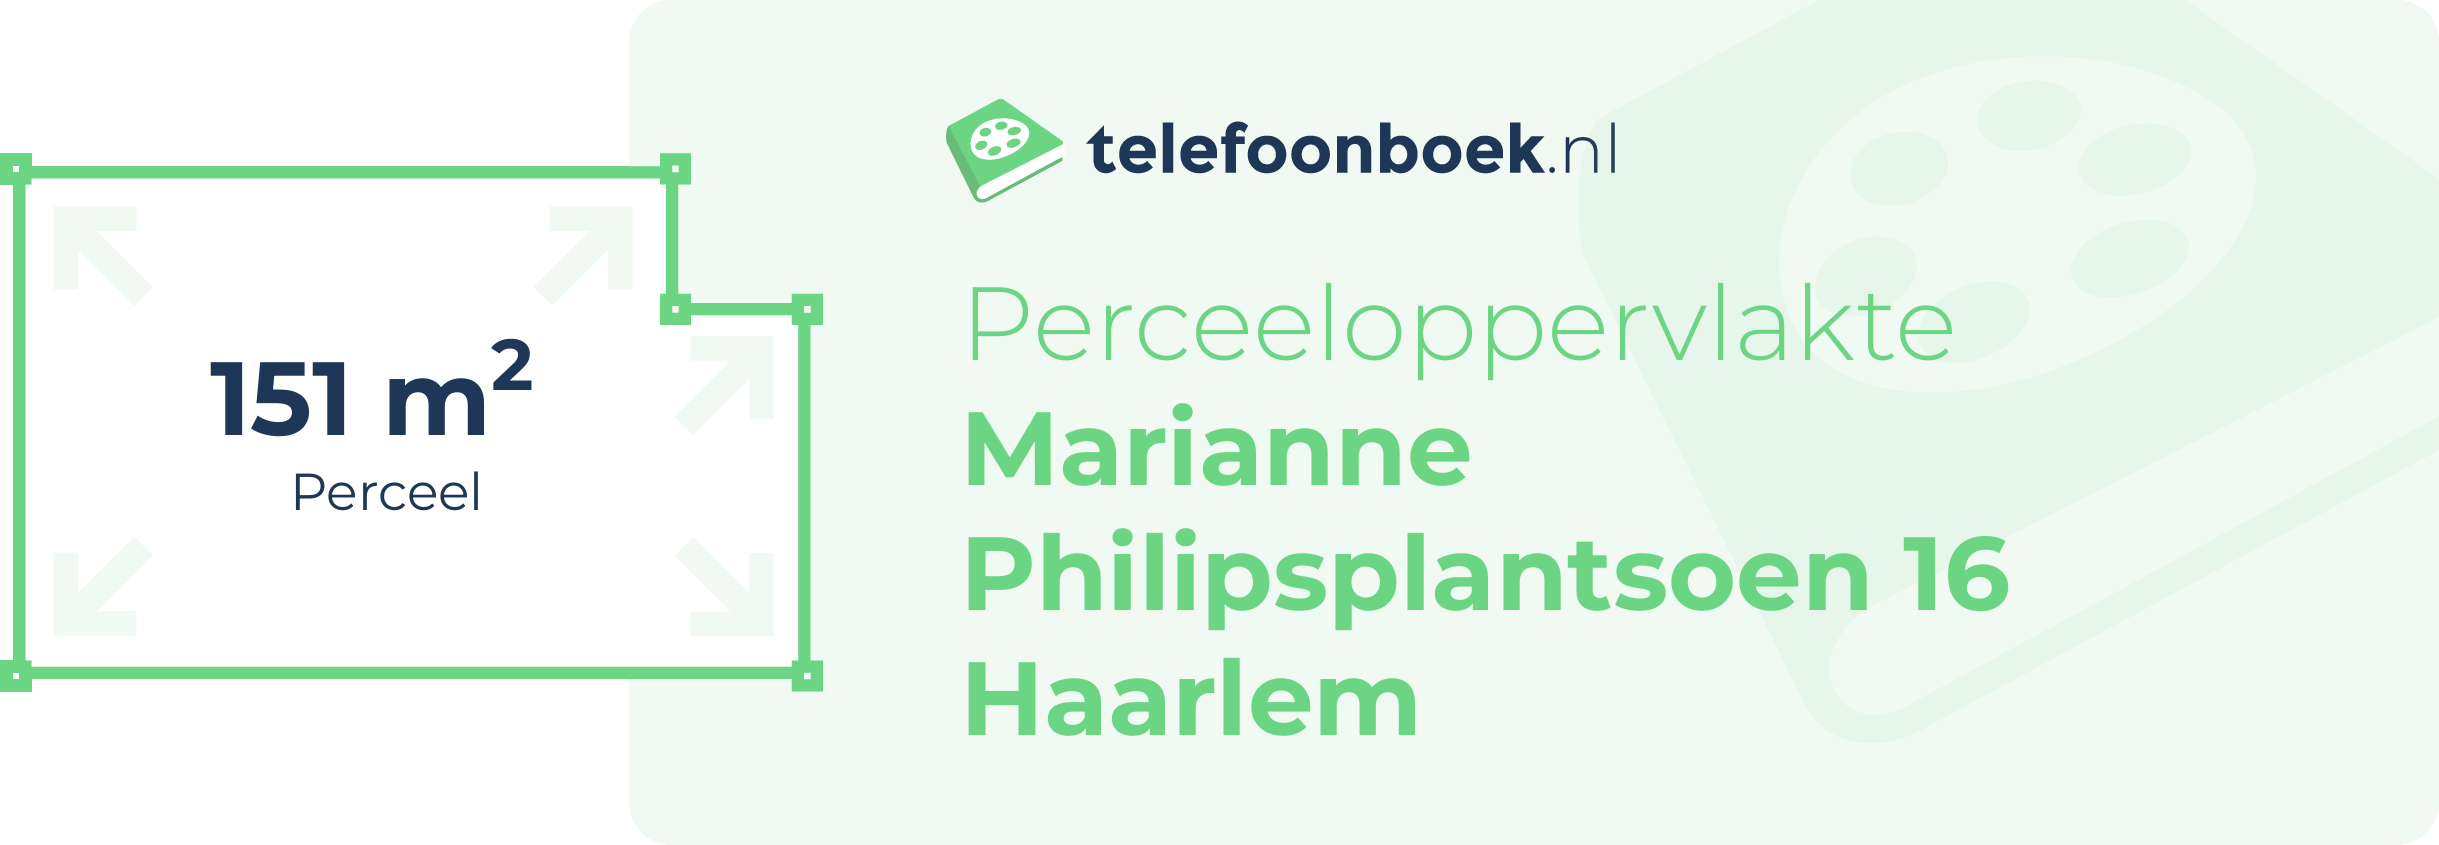 Perceeloppervlakte Marianne Philipsplantsoen 16 Haarlem